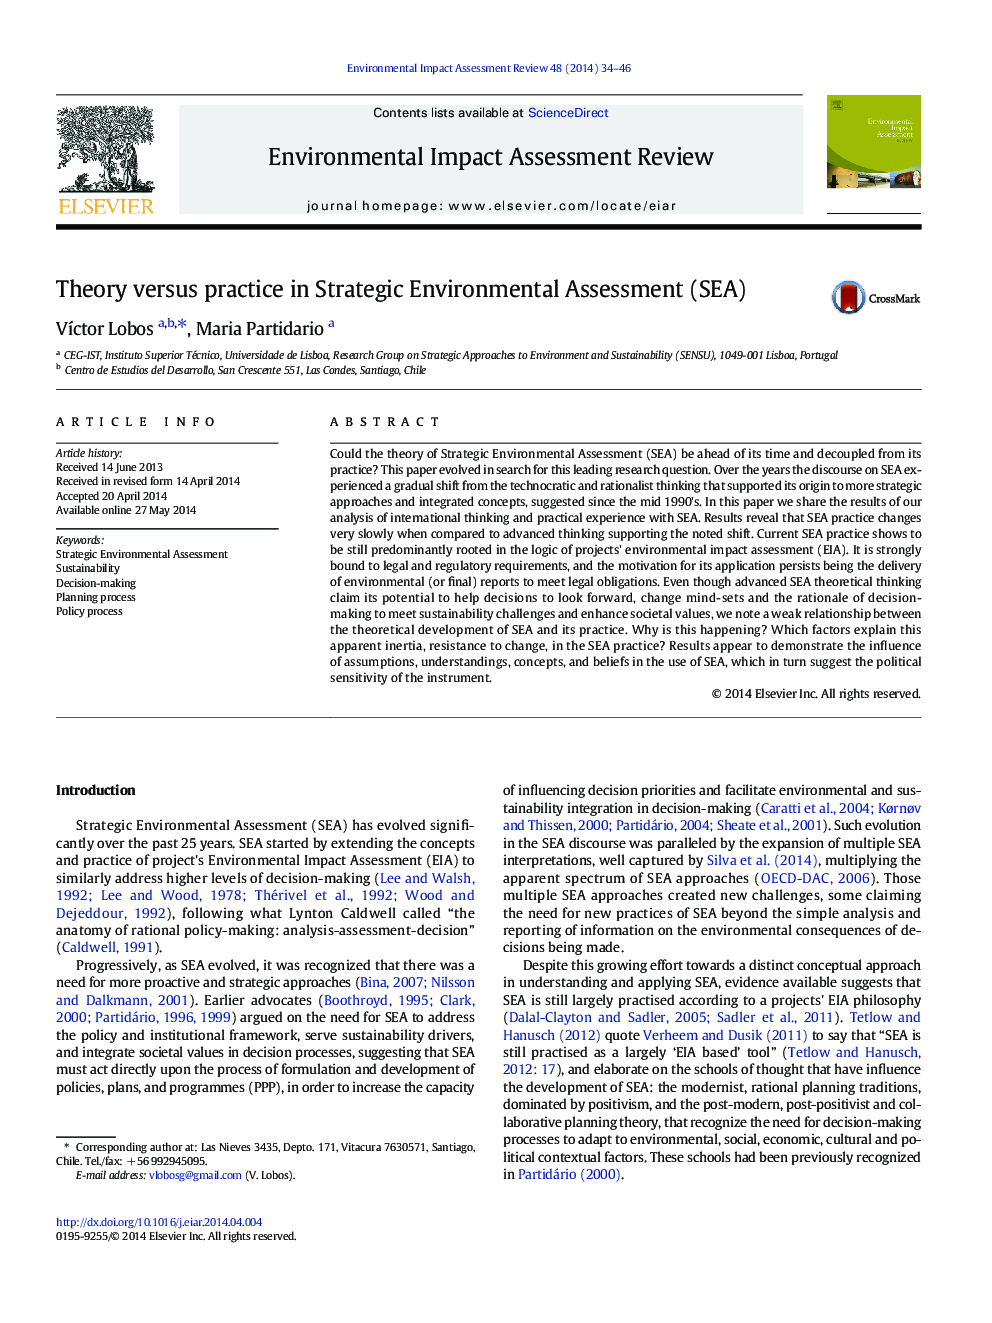 Theory versus practice in Strategic Environmental Assessment (SEA)